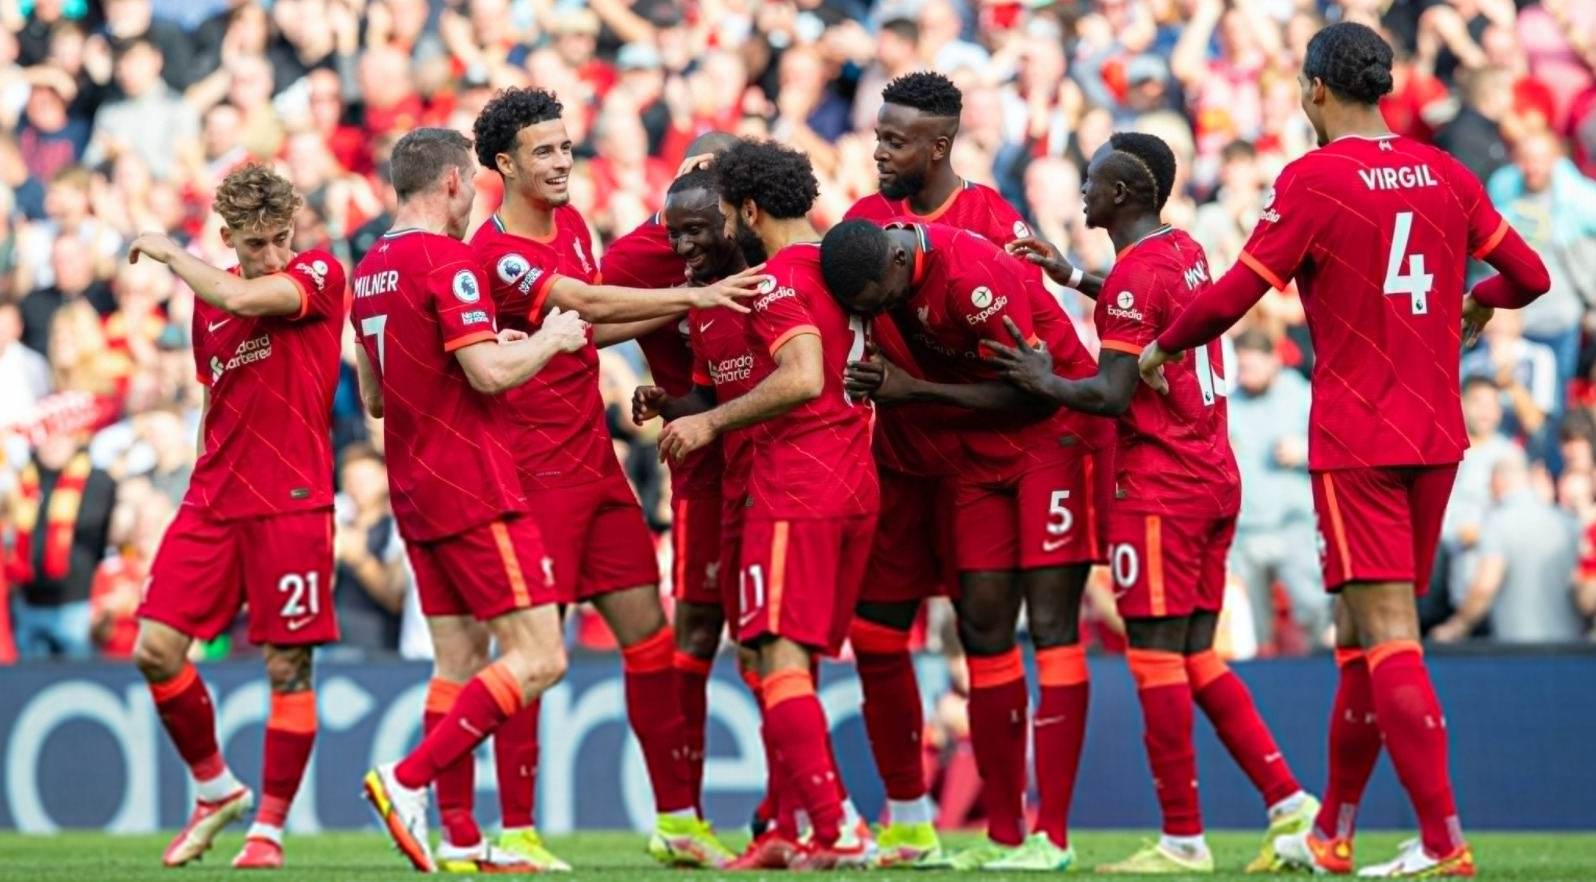 Le trio Mané-Salah-Keïta en forme, Liverpool fait subir sa loi à Crystal Palace